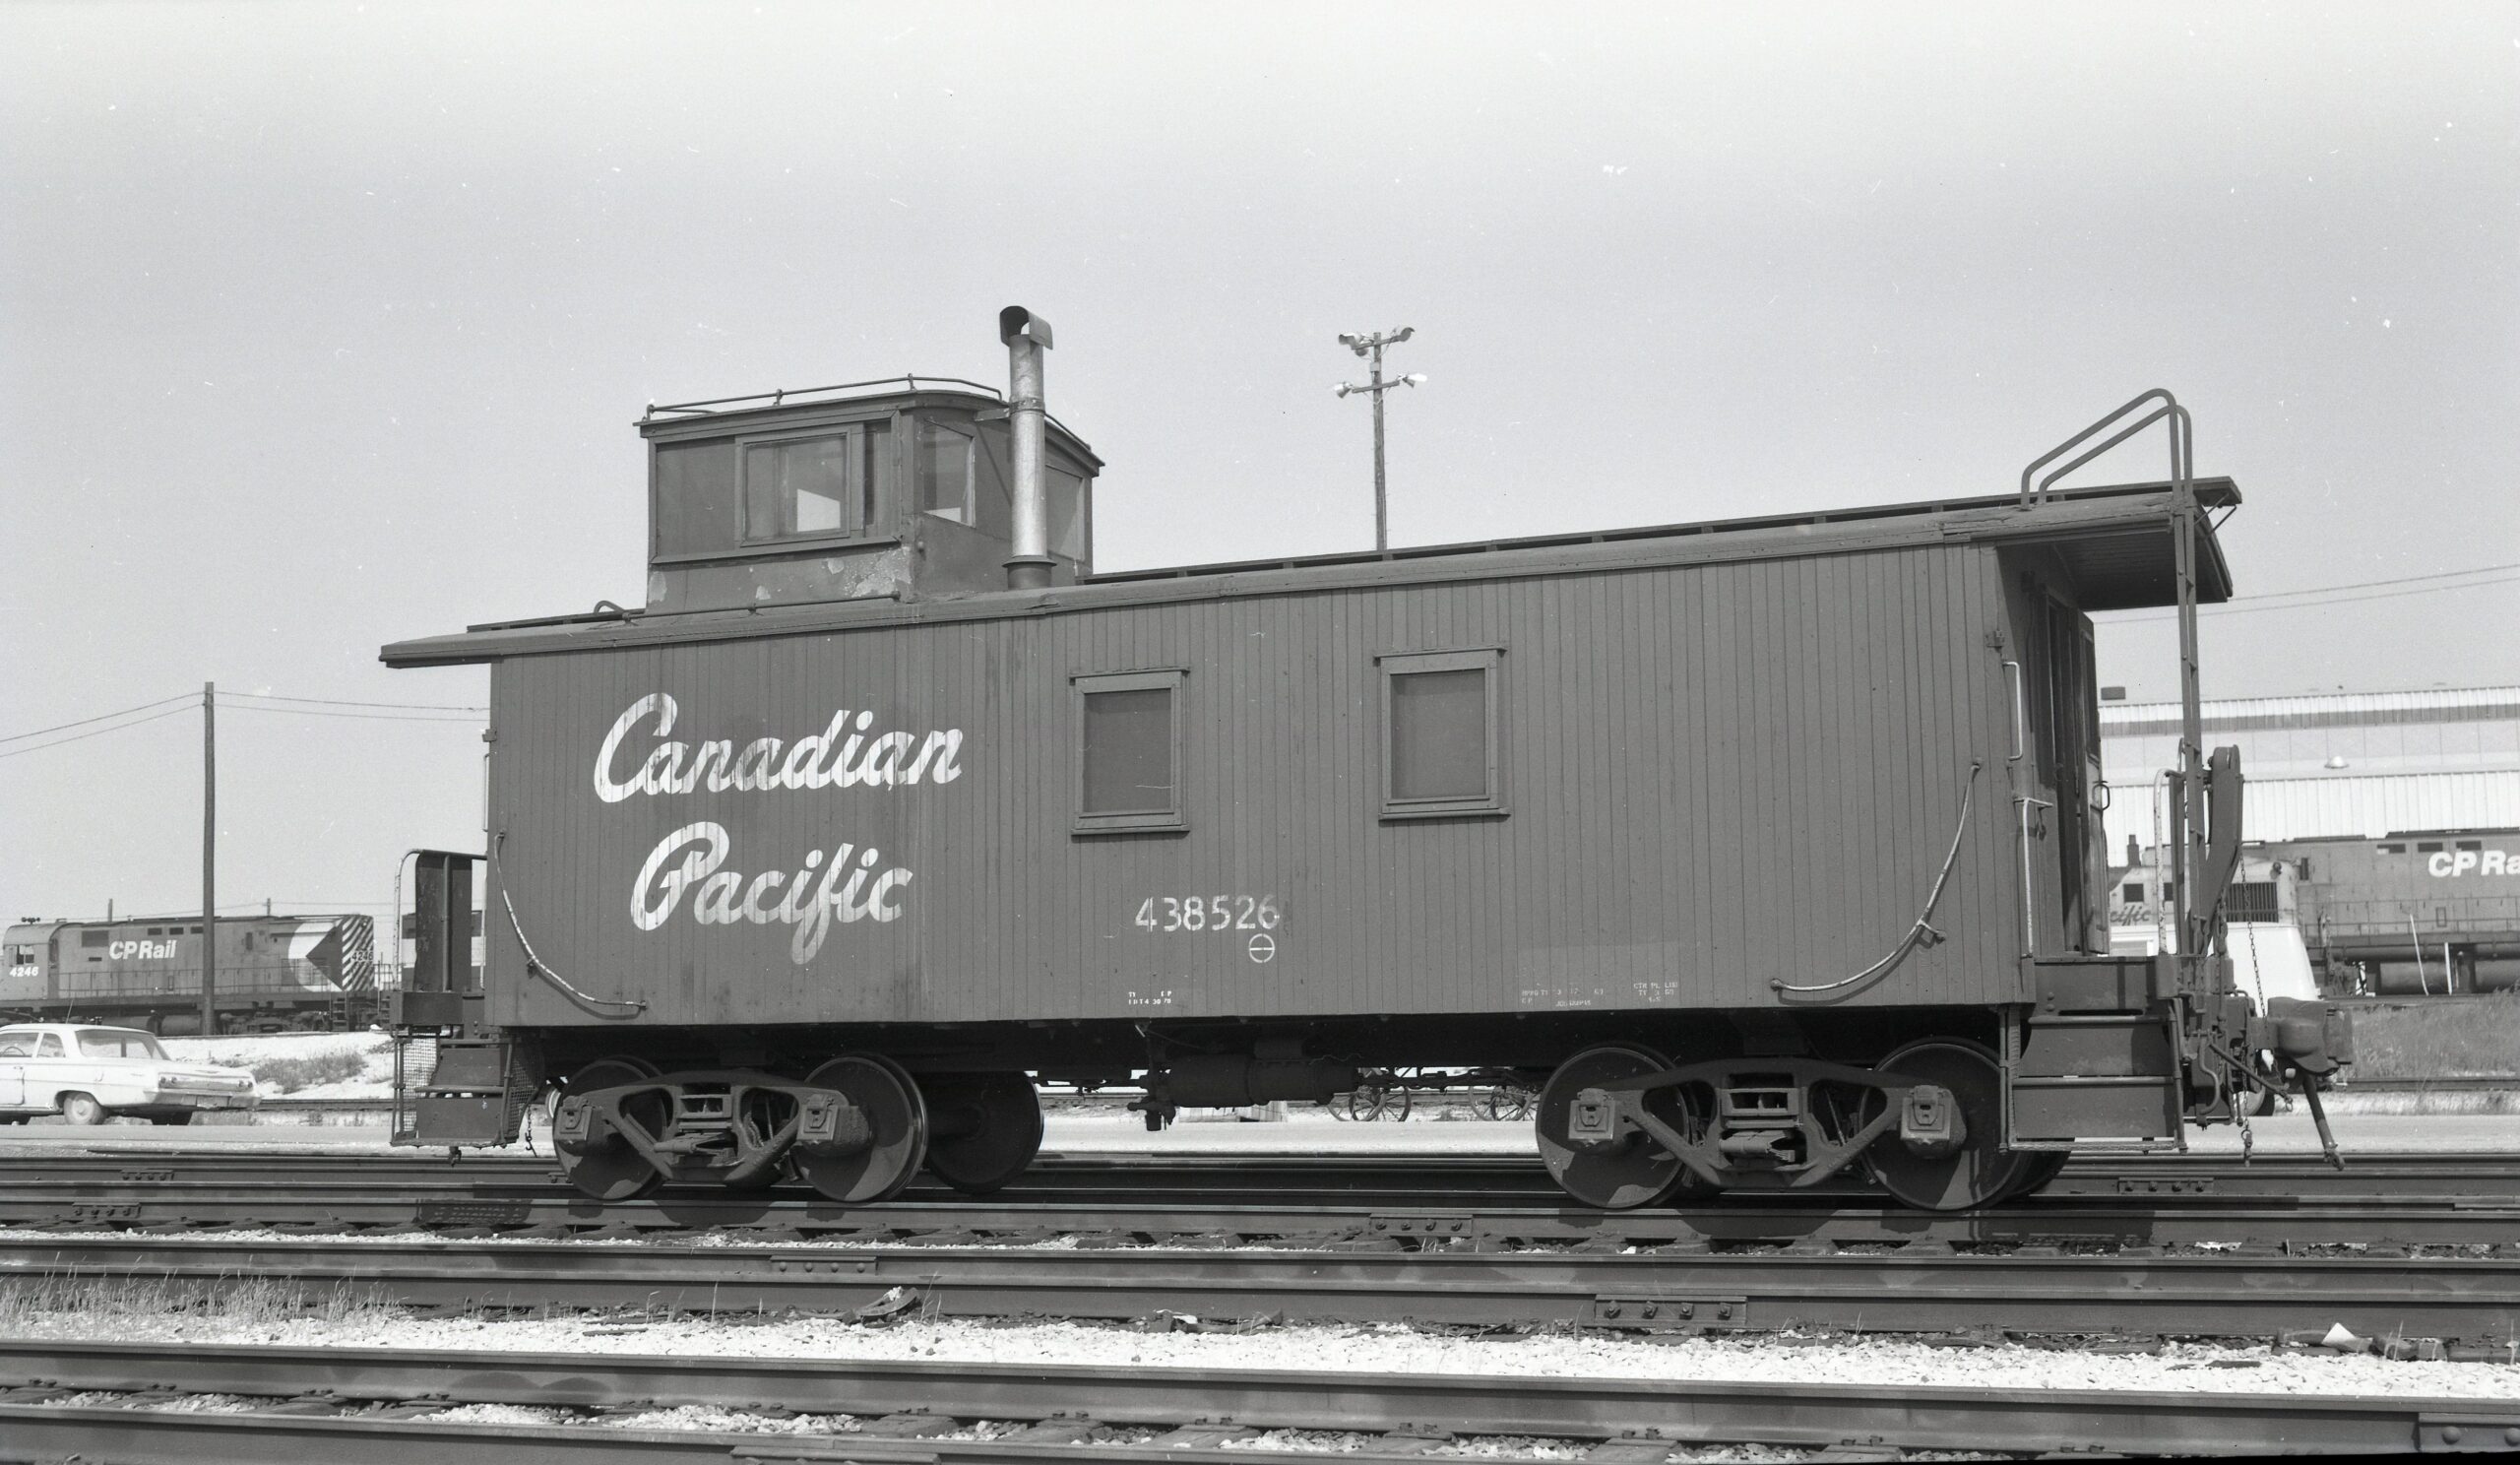 Canadian Pacific | Toronto, Ontario | Wooden caboose 438526 | June 24, 1970